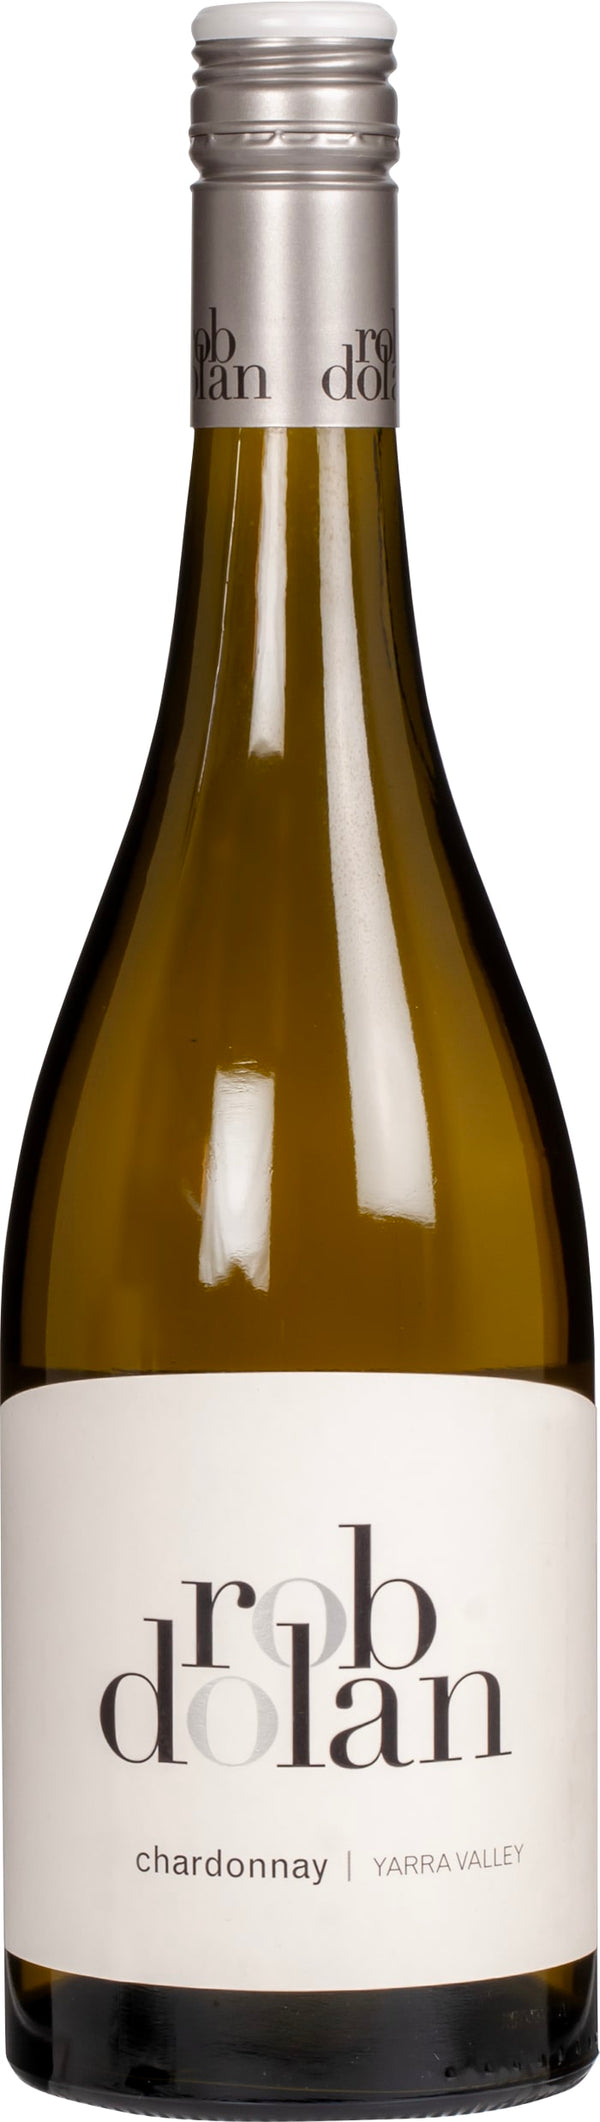 Rob Dolan White Label Chardonnay 2020 6x75cl - Just Wines 